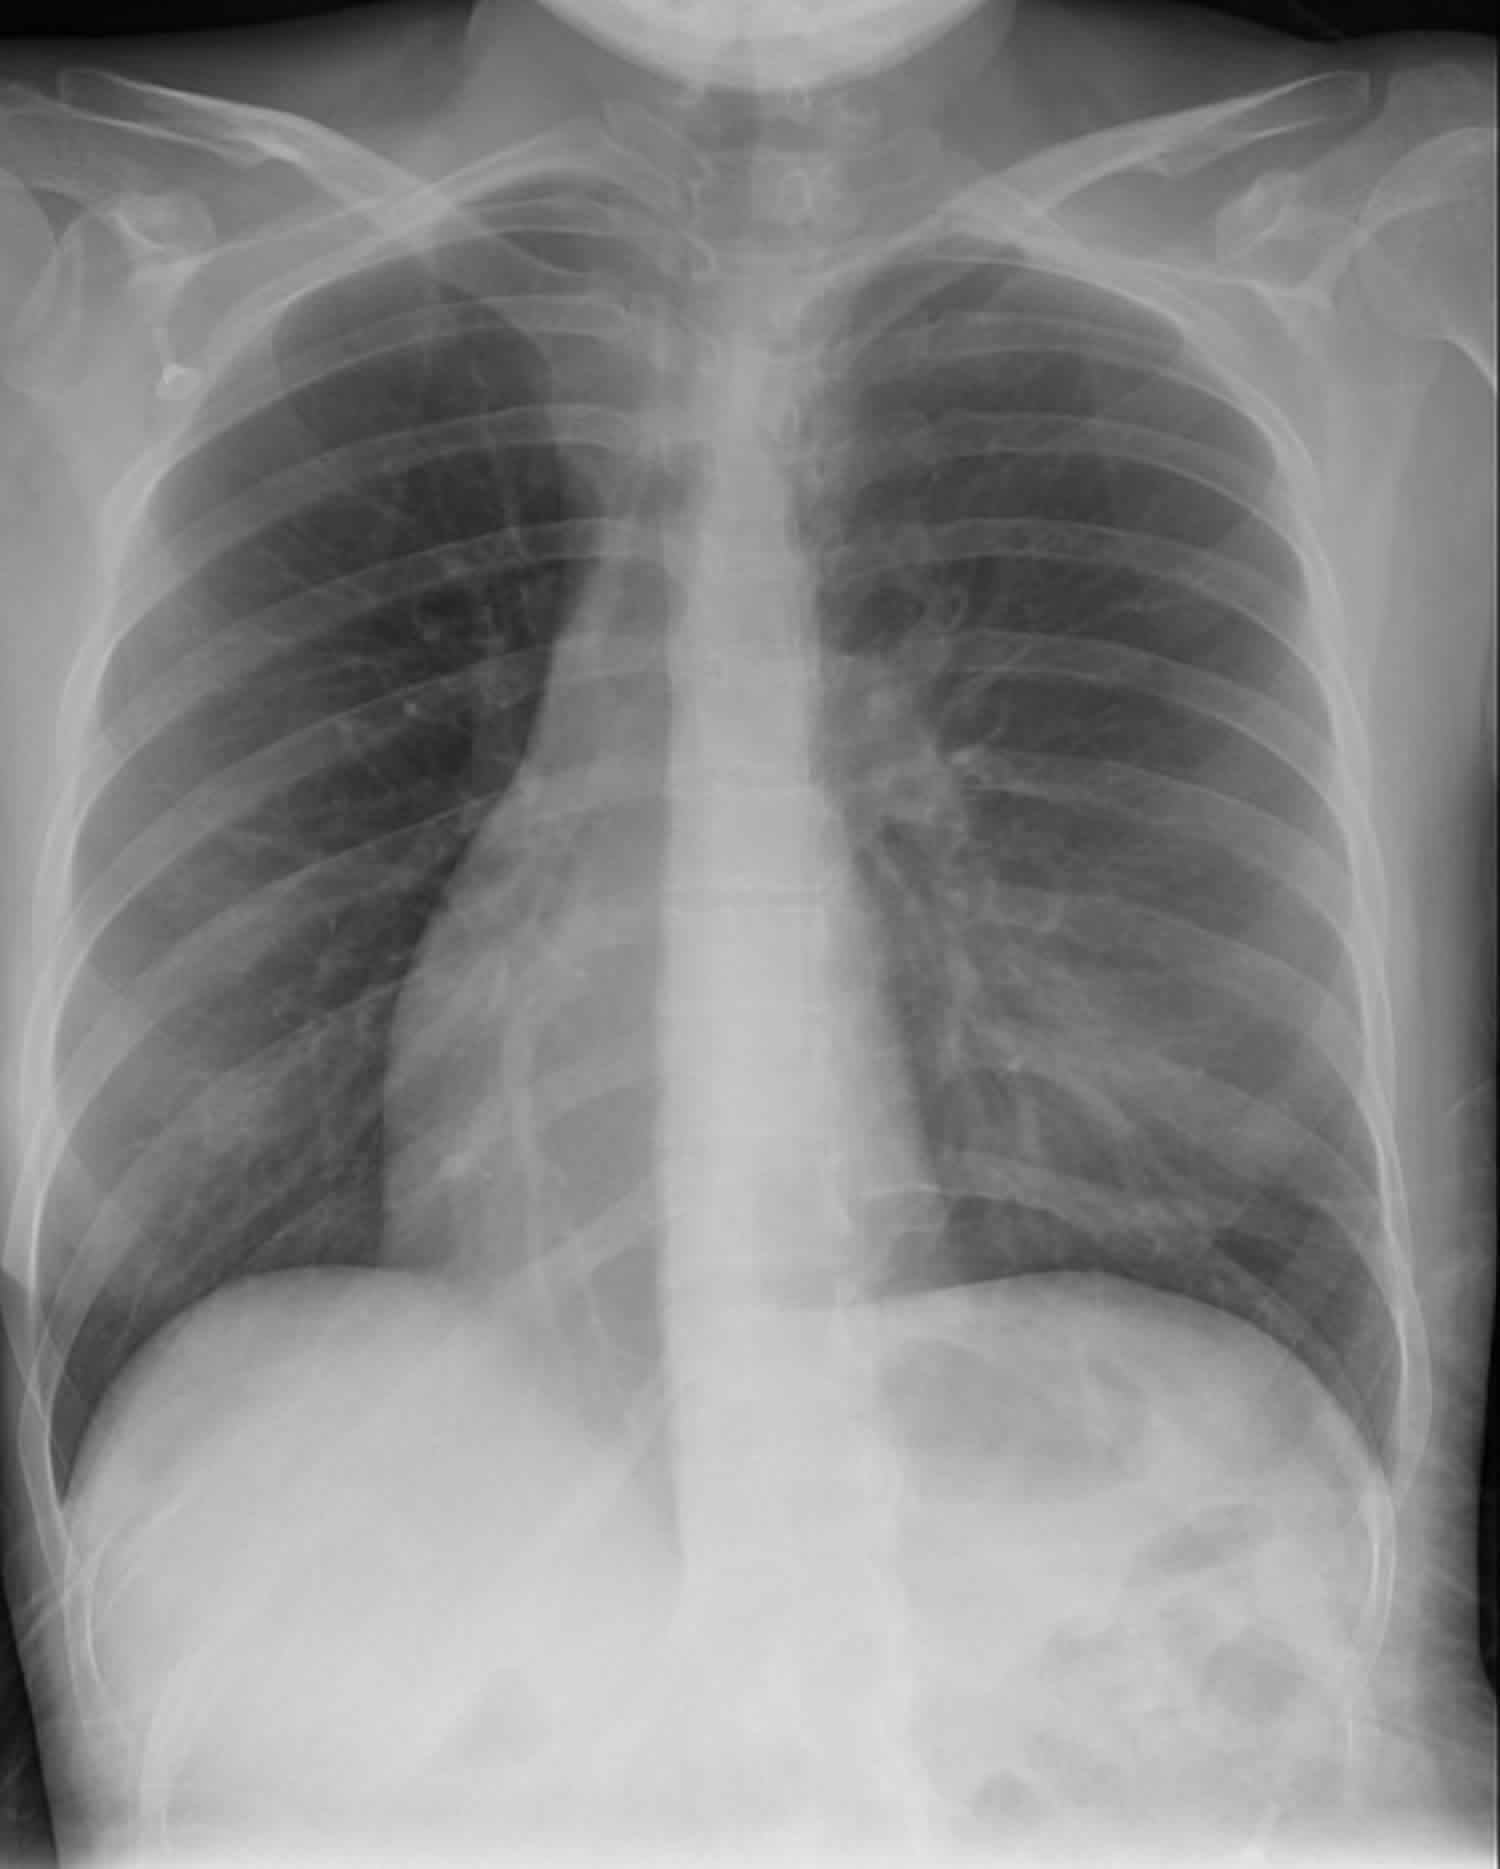 Dextrocardia chest x-ray